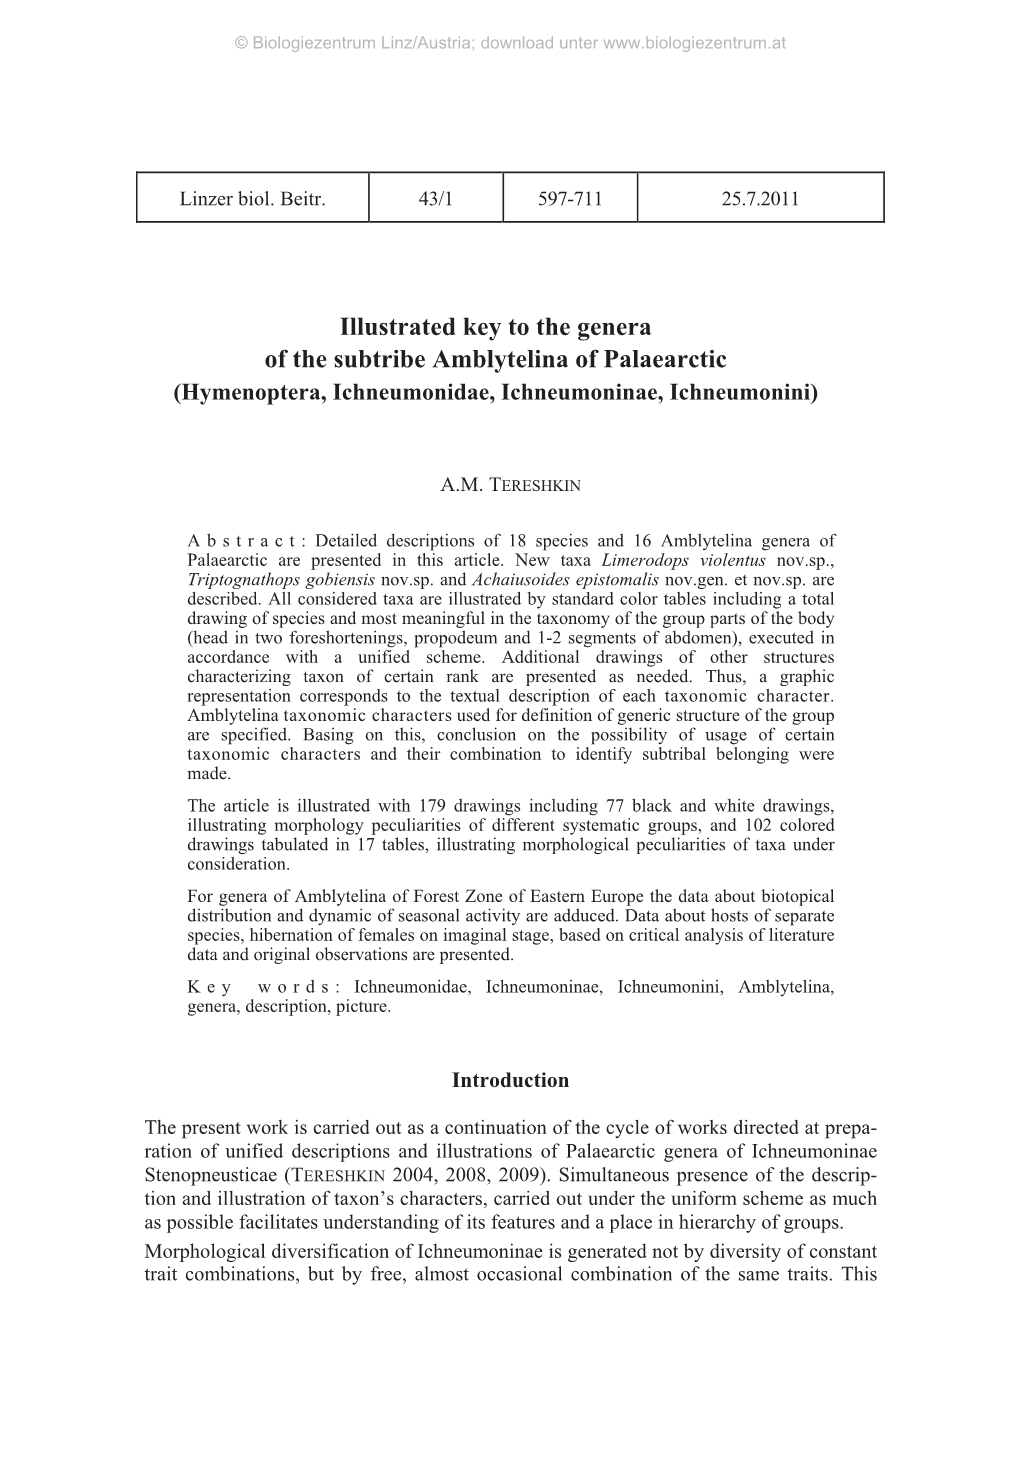 Illustrated Key to the Genera of the Subtribe Amblytelina of Palaearctic (Hymenoptera, Ichneumonidae, Ichneumoninae, Ichneumonini)